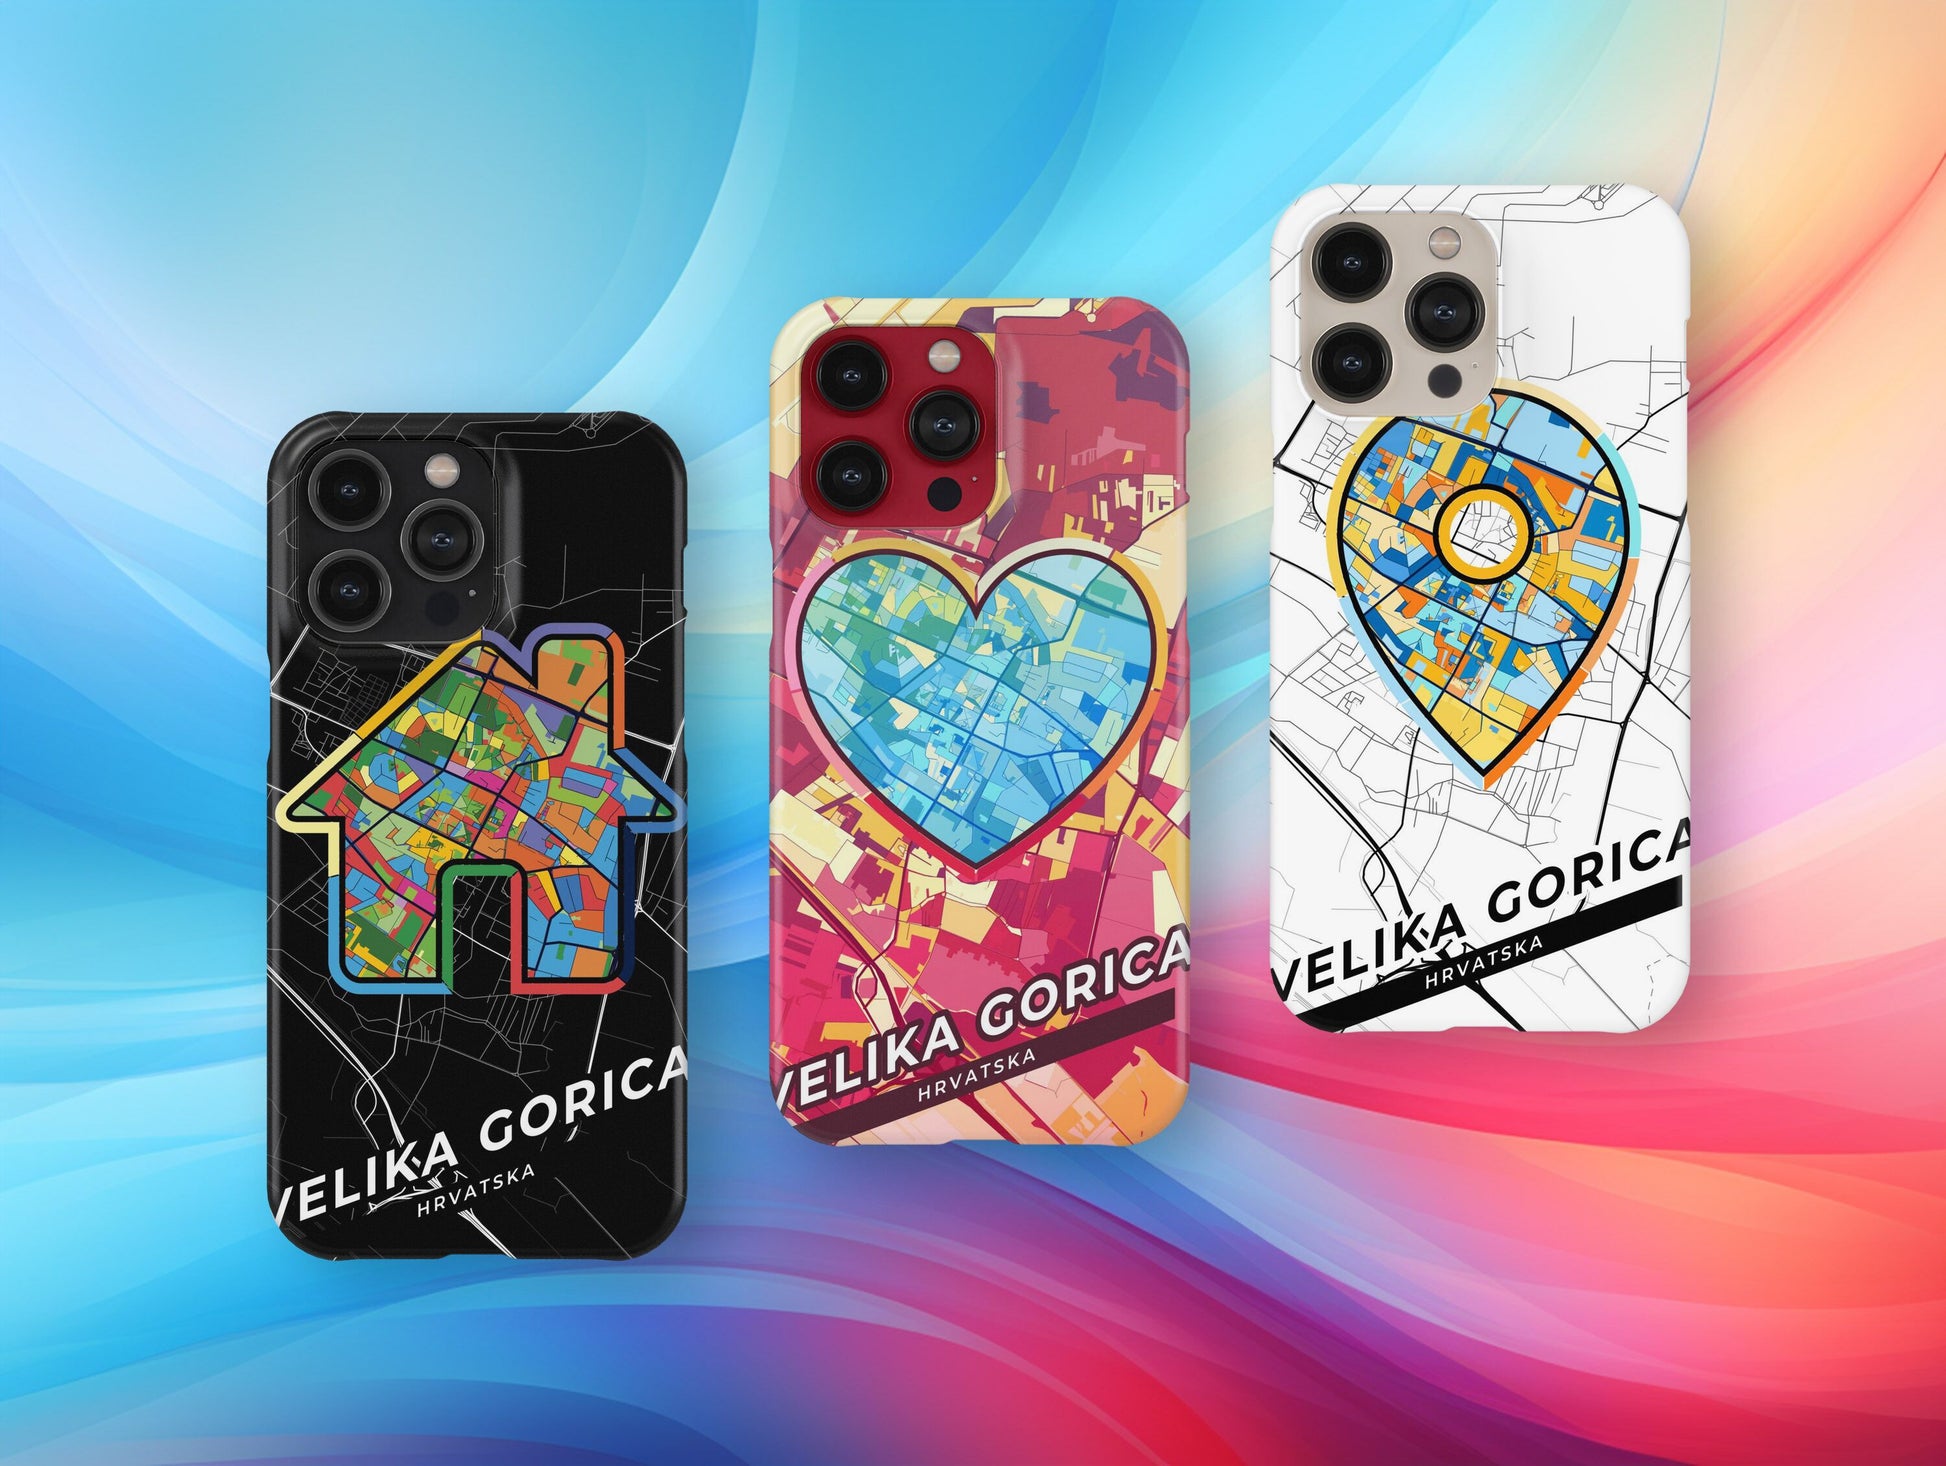 Velika Gorica Hrvatska slim phone case with colorful icon. Birthday, wedding or housewarming gift. Couple match cases.